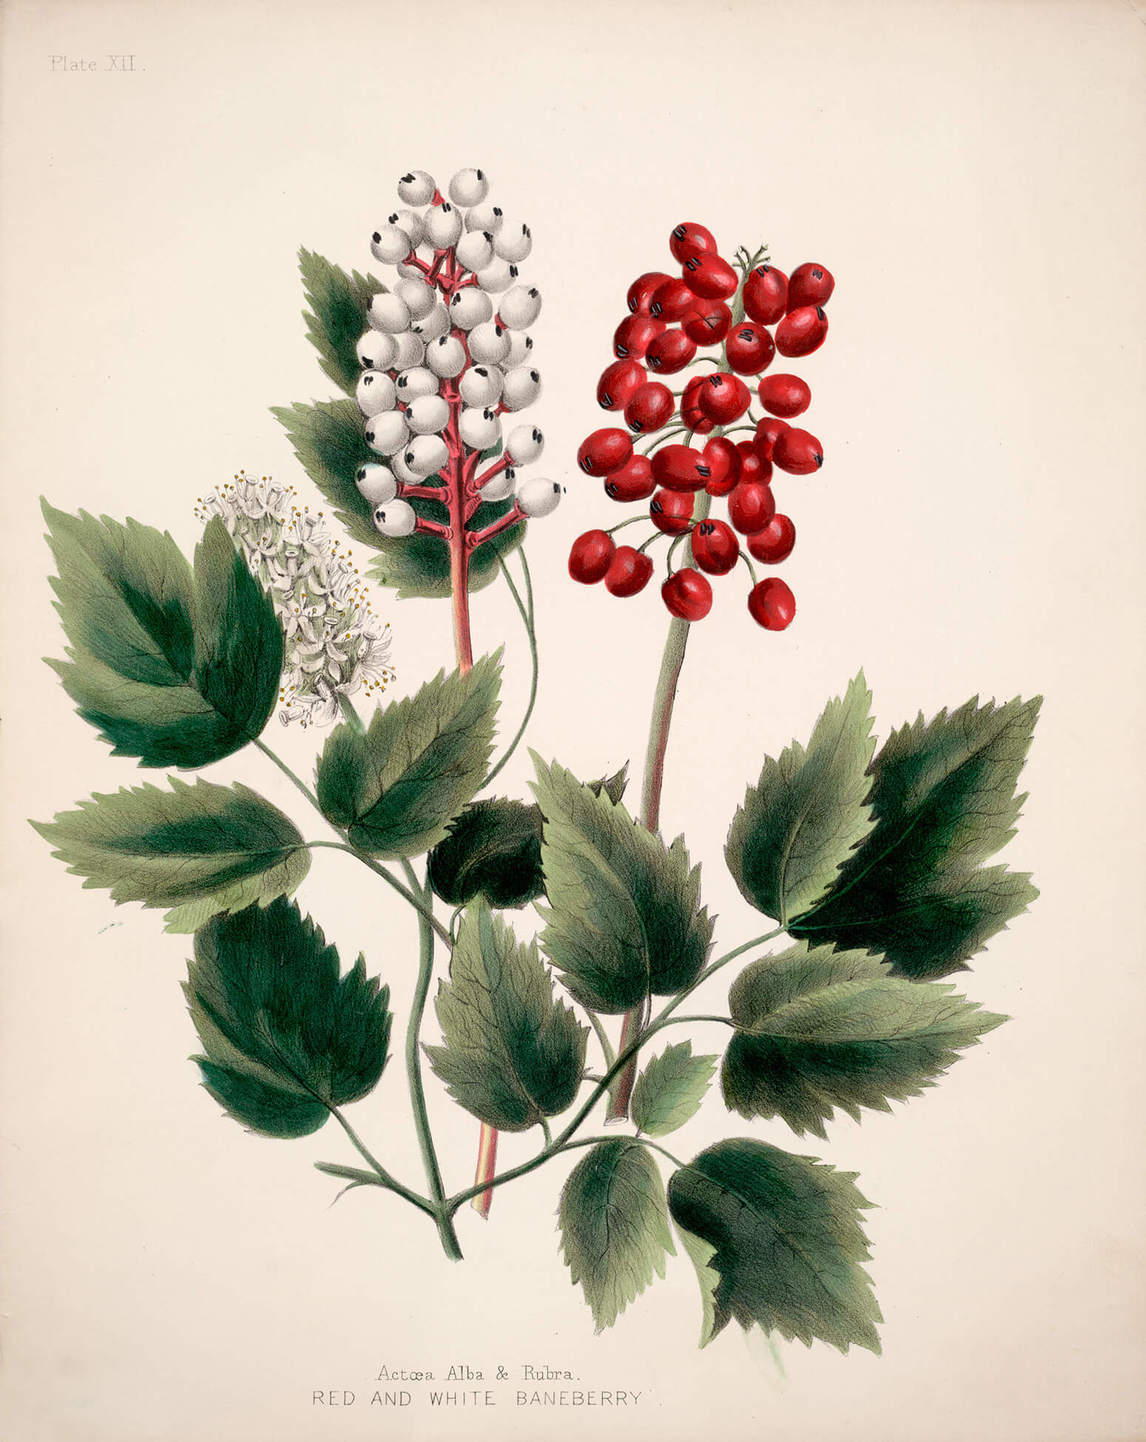 Maria Frances Ann Morris Miller, Actoea Alba and Rubra, Red and White Baneberry (Actoea Alba et Rubra, Herbe de Saint-Christophe blanche et rouge), 1853